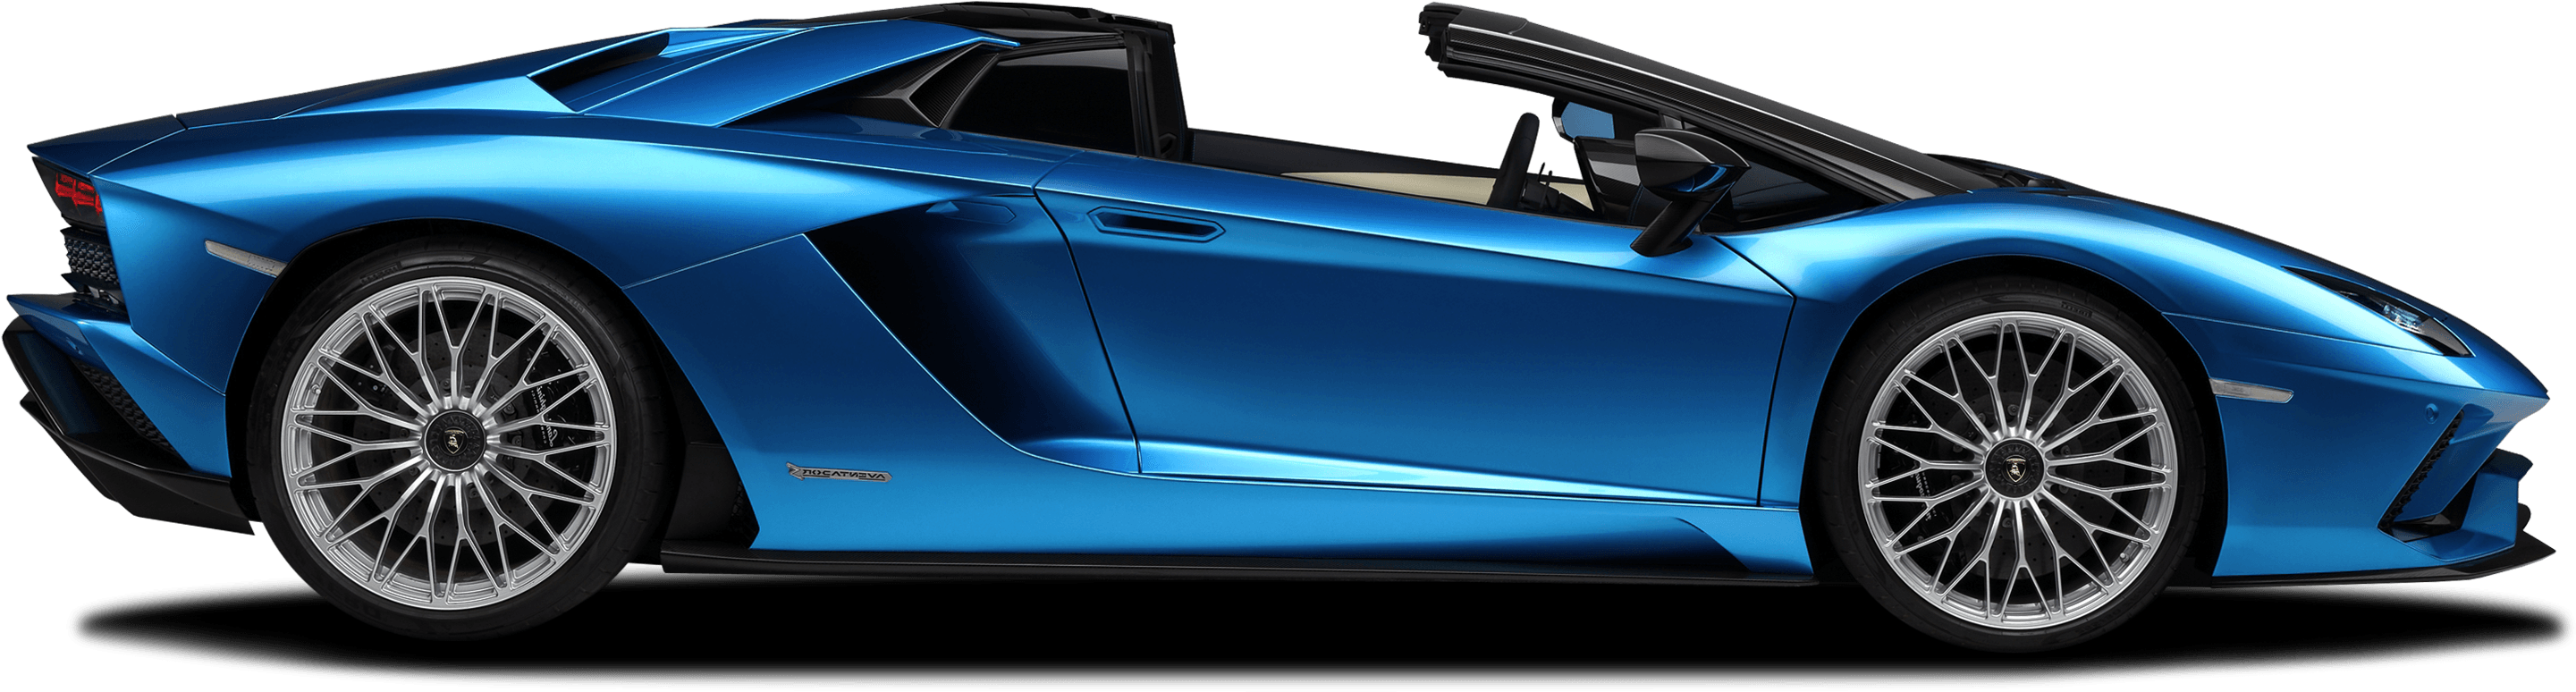 Aventador azul Lamborghini